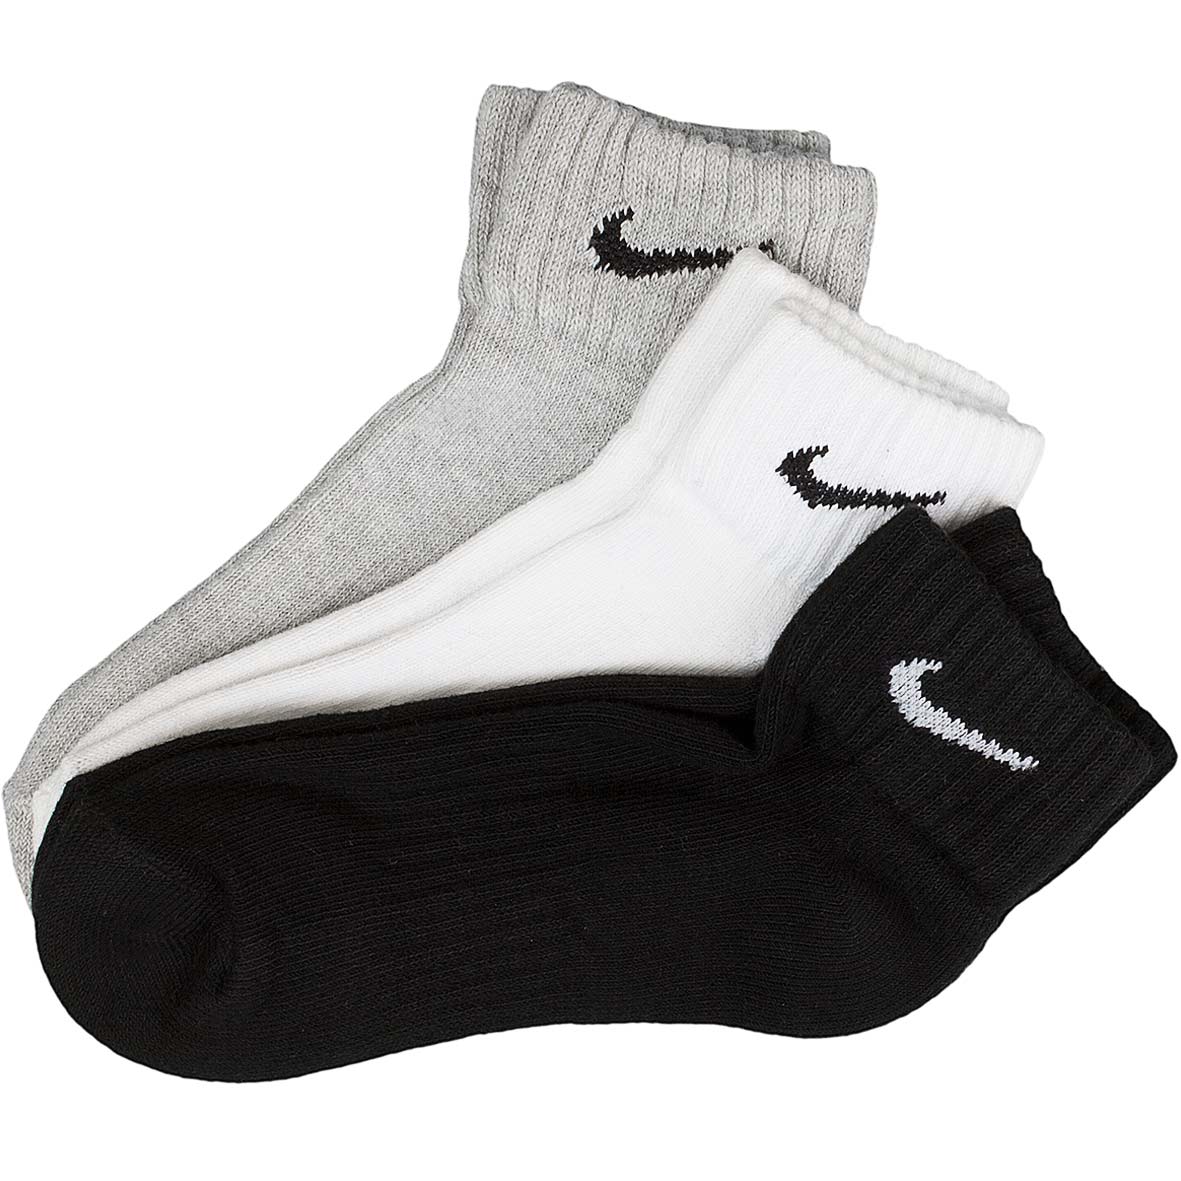 ☆ Nike Socken Cushion Quarter 3er mehrfarbig - hier bestellen!